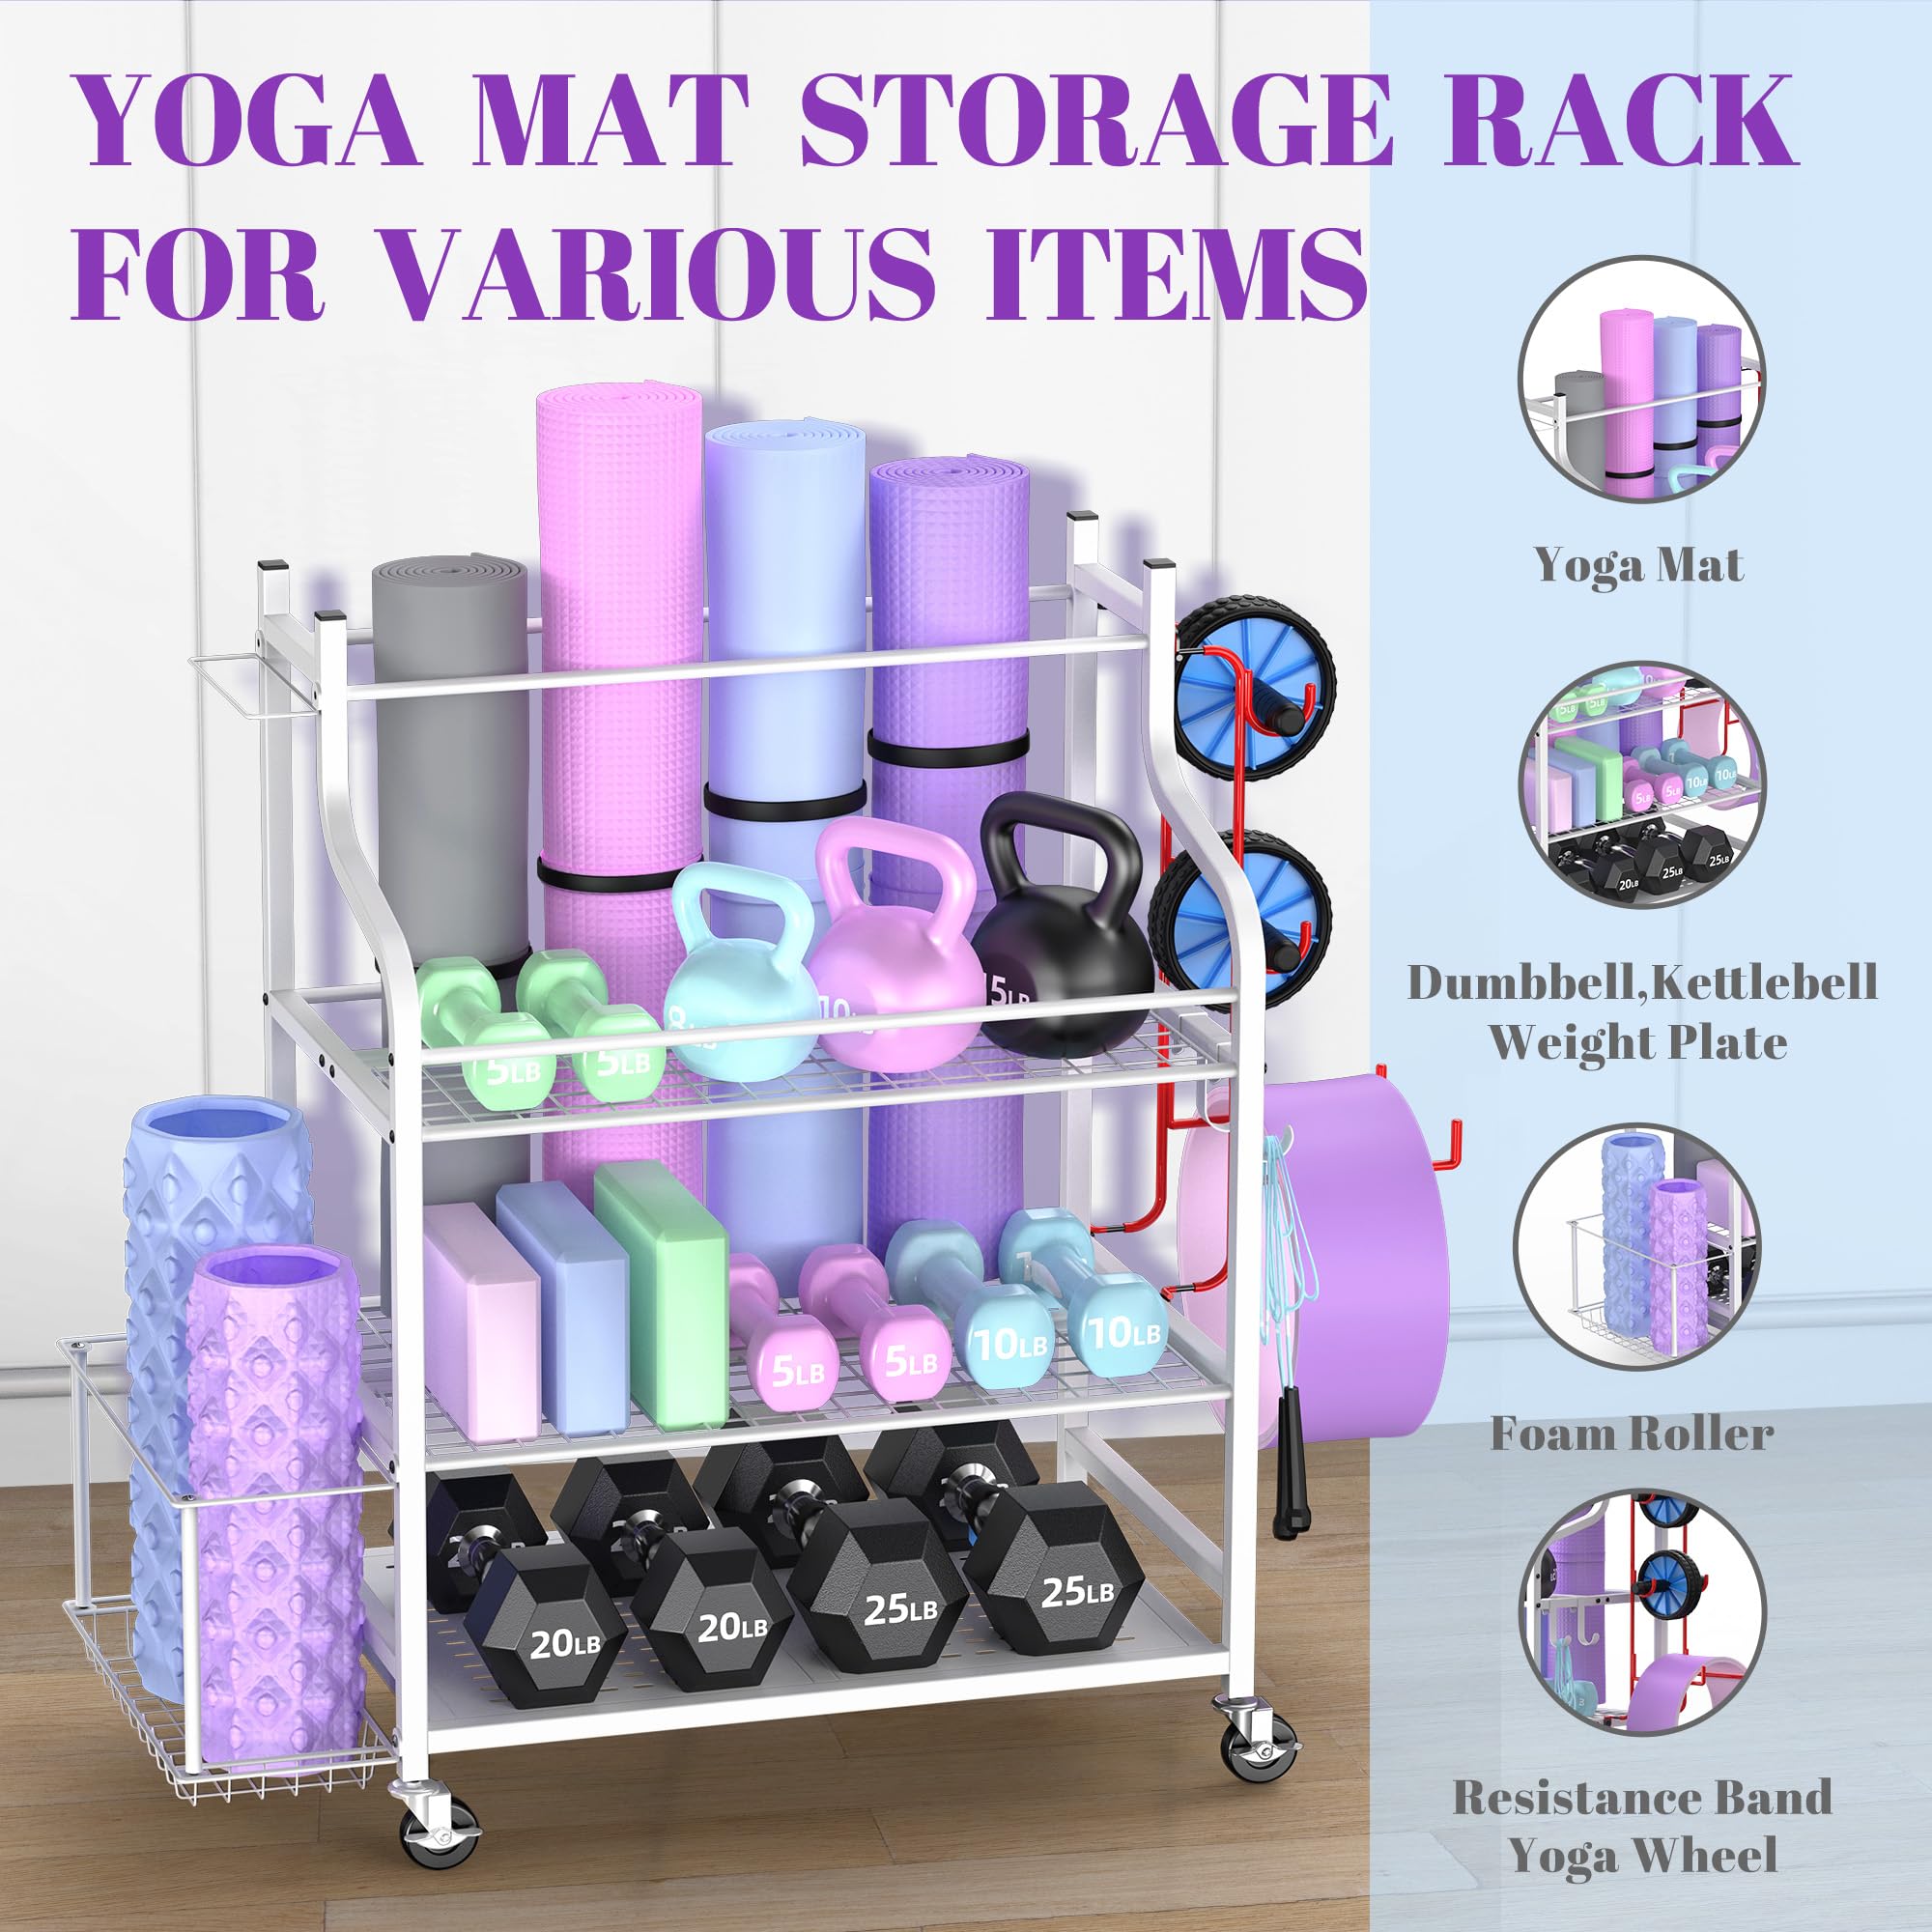 Mythinglogic Home Gym Storage Rack for Yoga Equipment, White